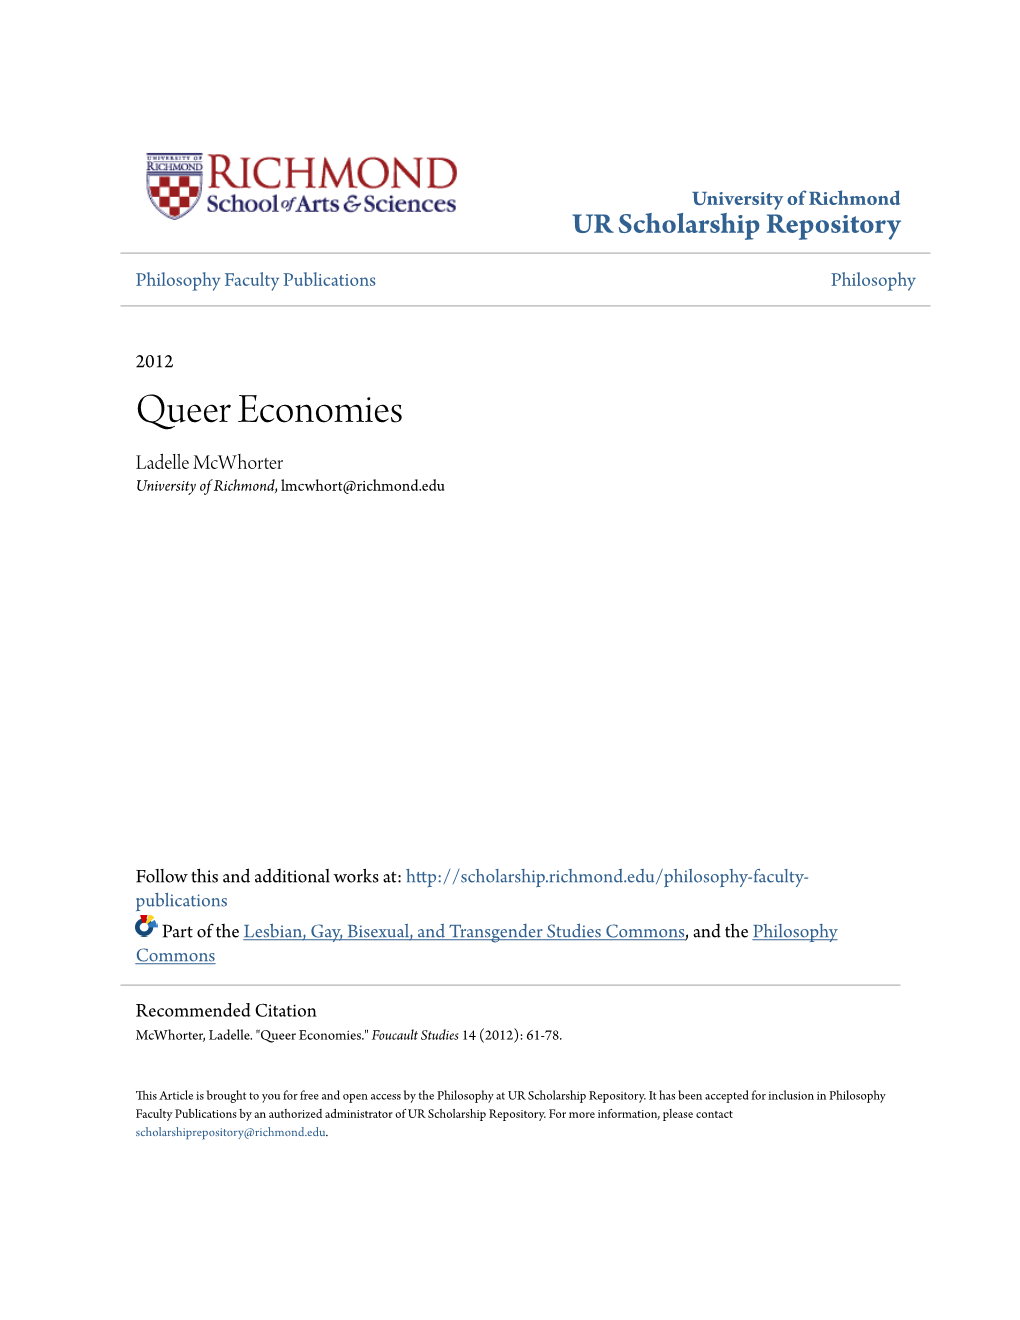 Queer Economies Ladelle Mcwhorter University of Richmond, Lmcwhort@Richmond.Edu